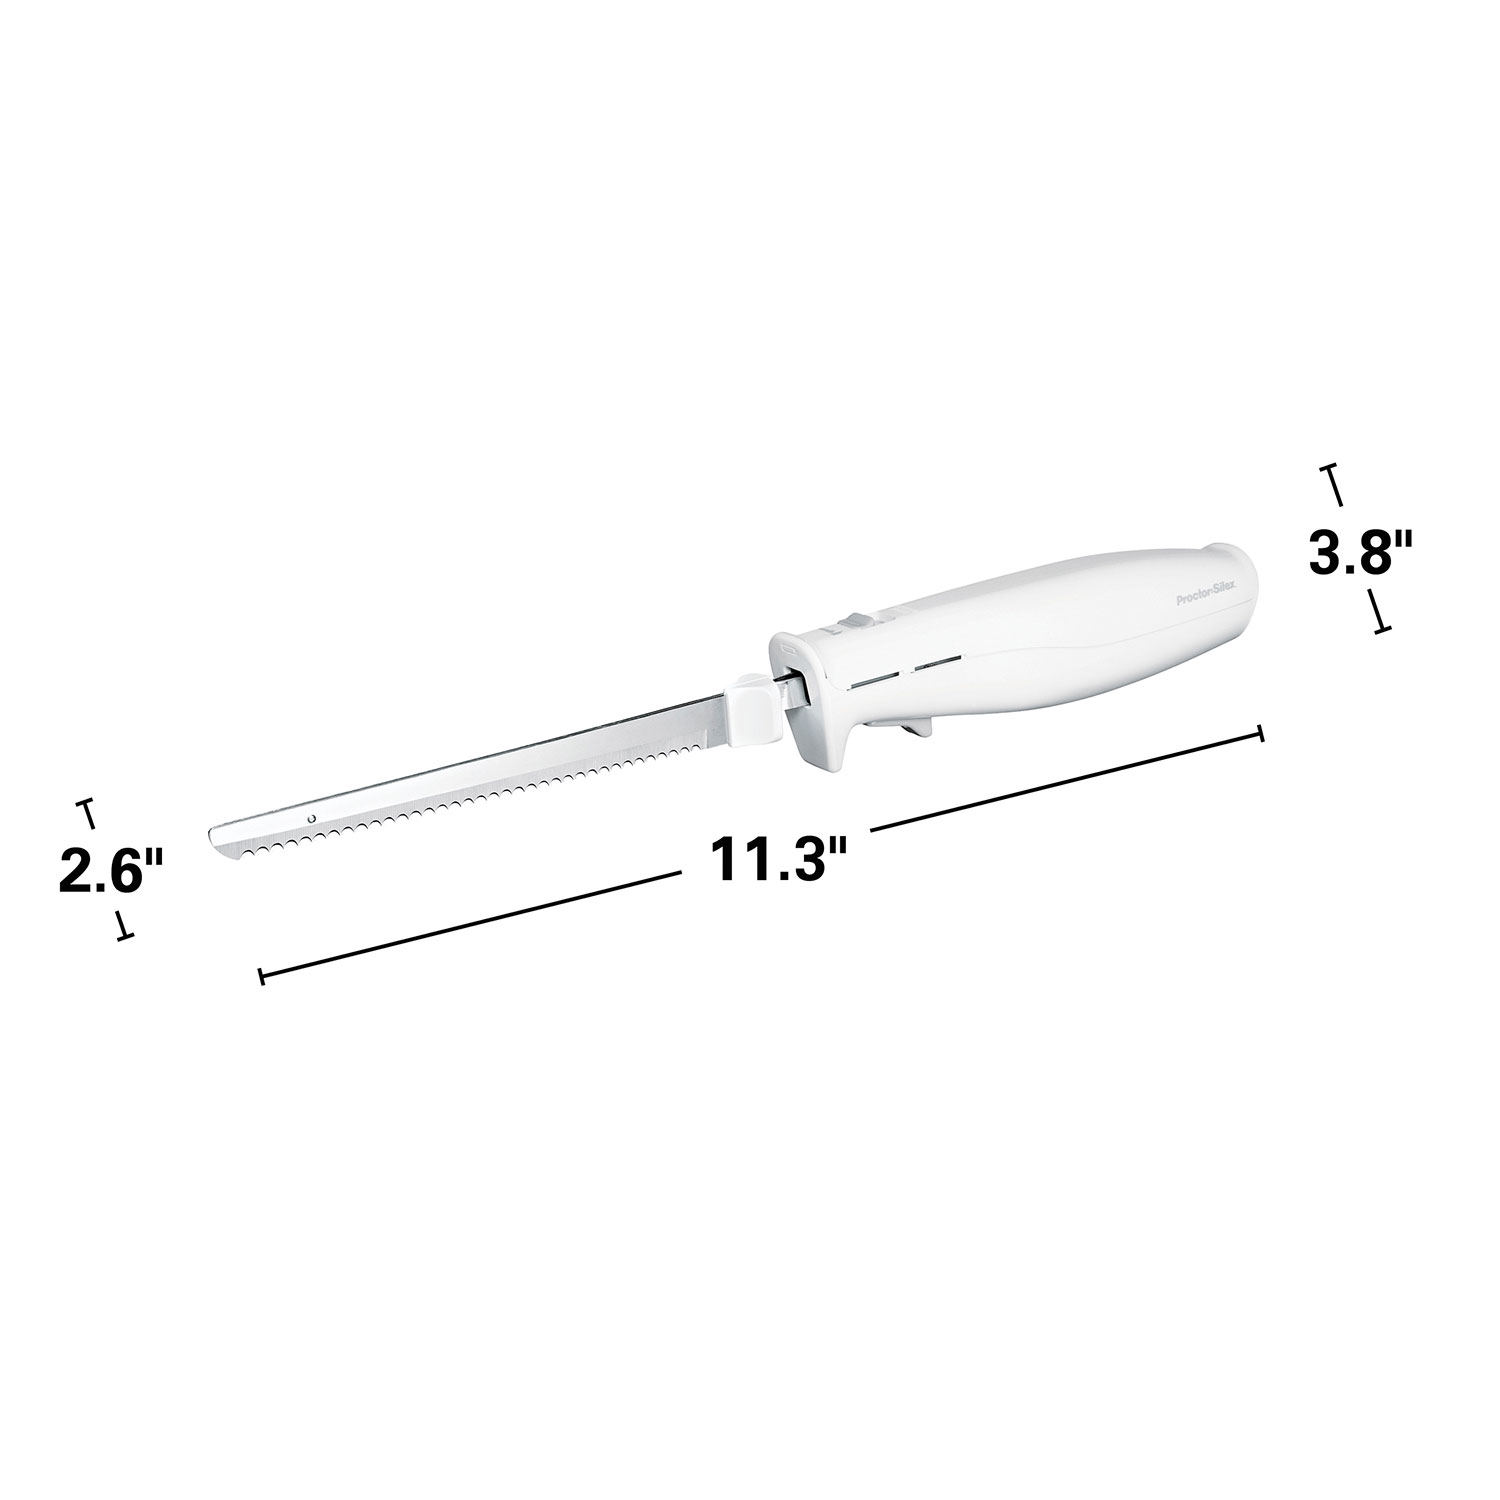 Easy Slice™ Electric Knife - Model 74311Y